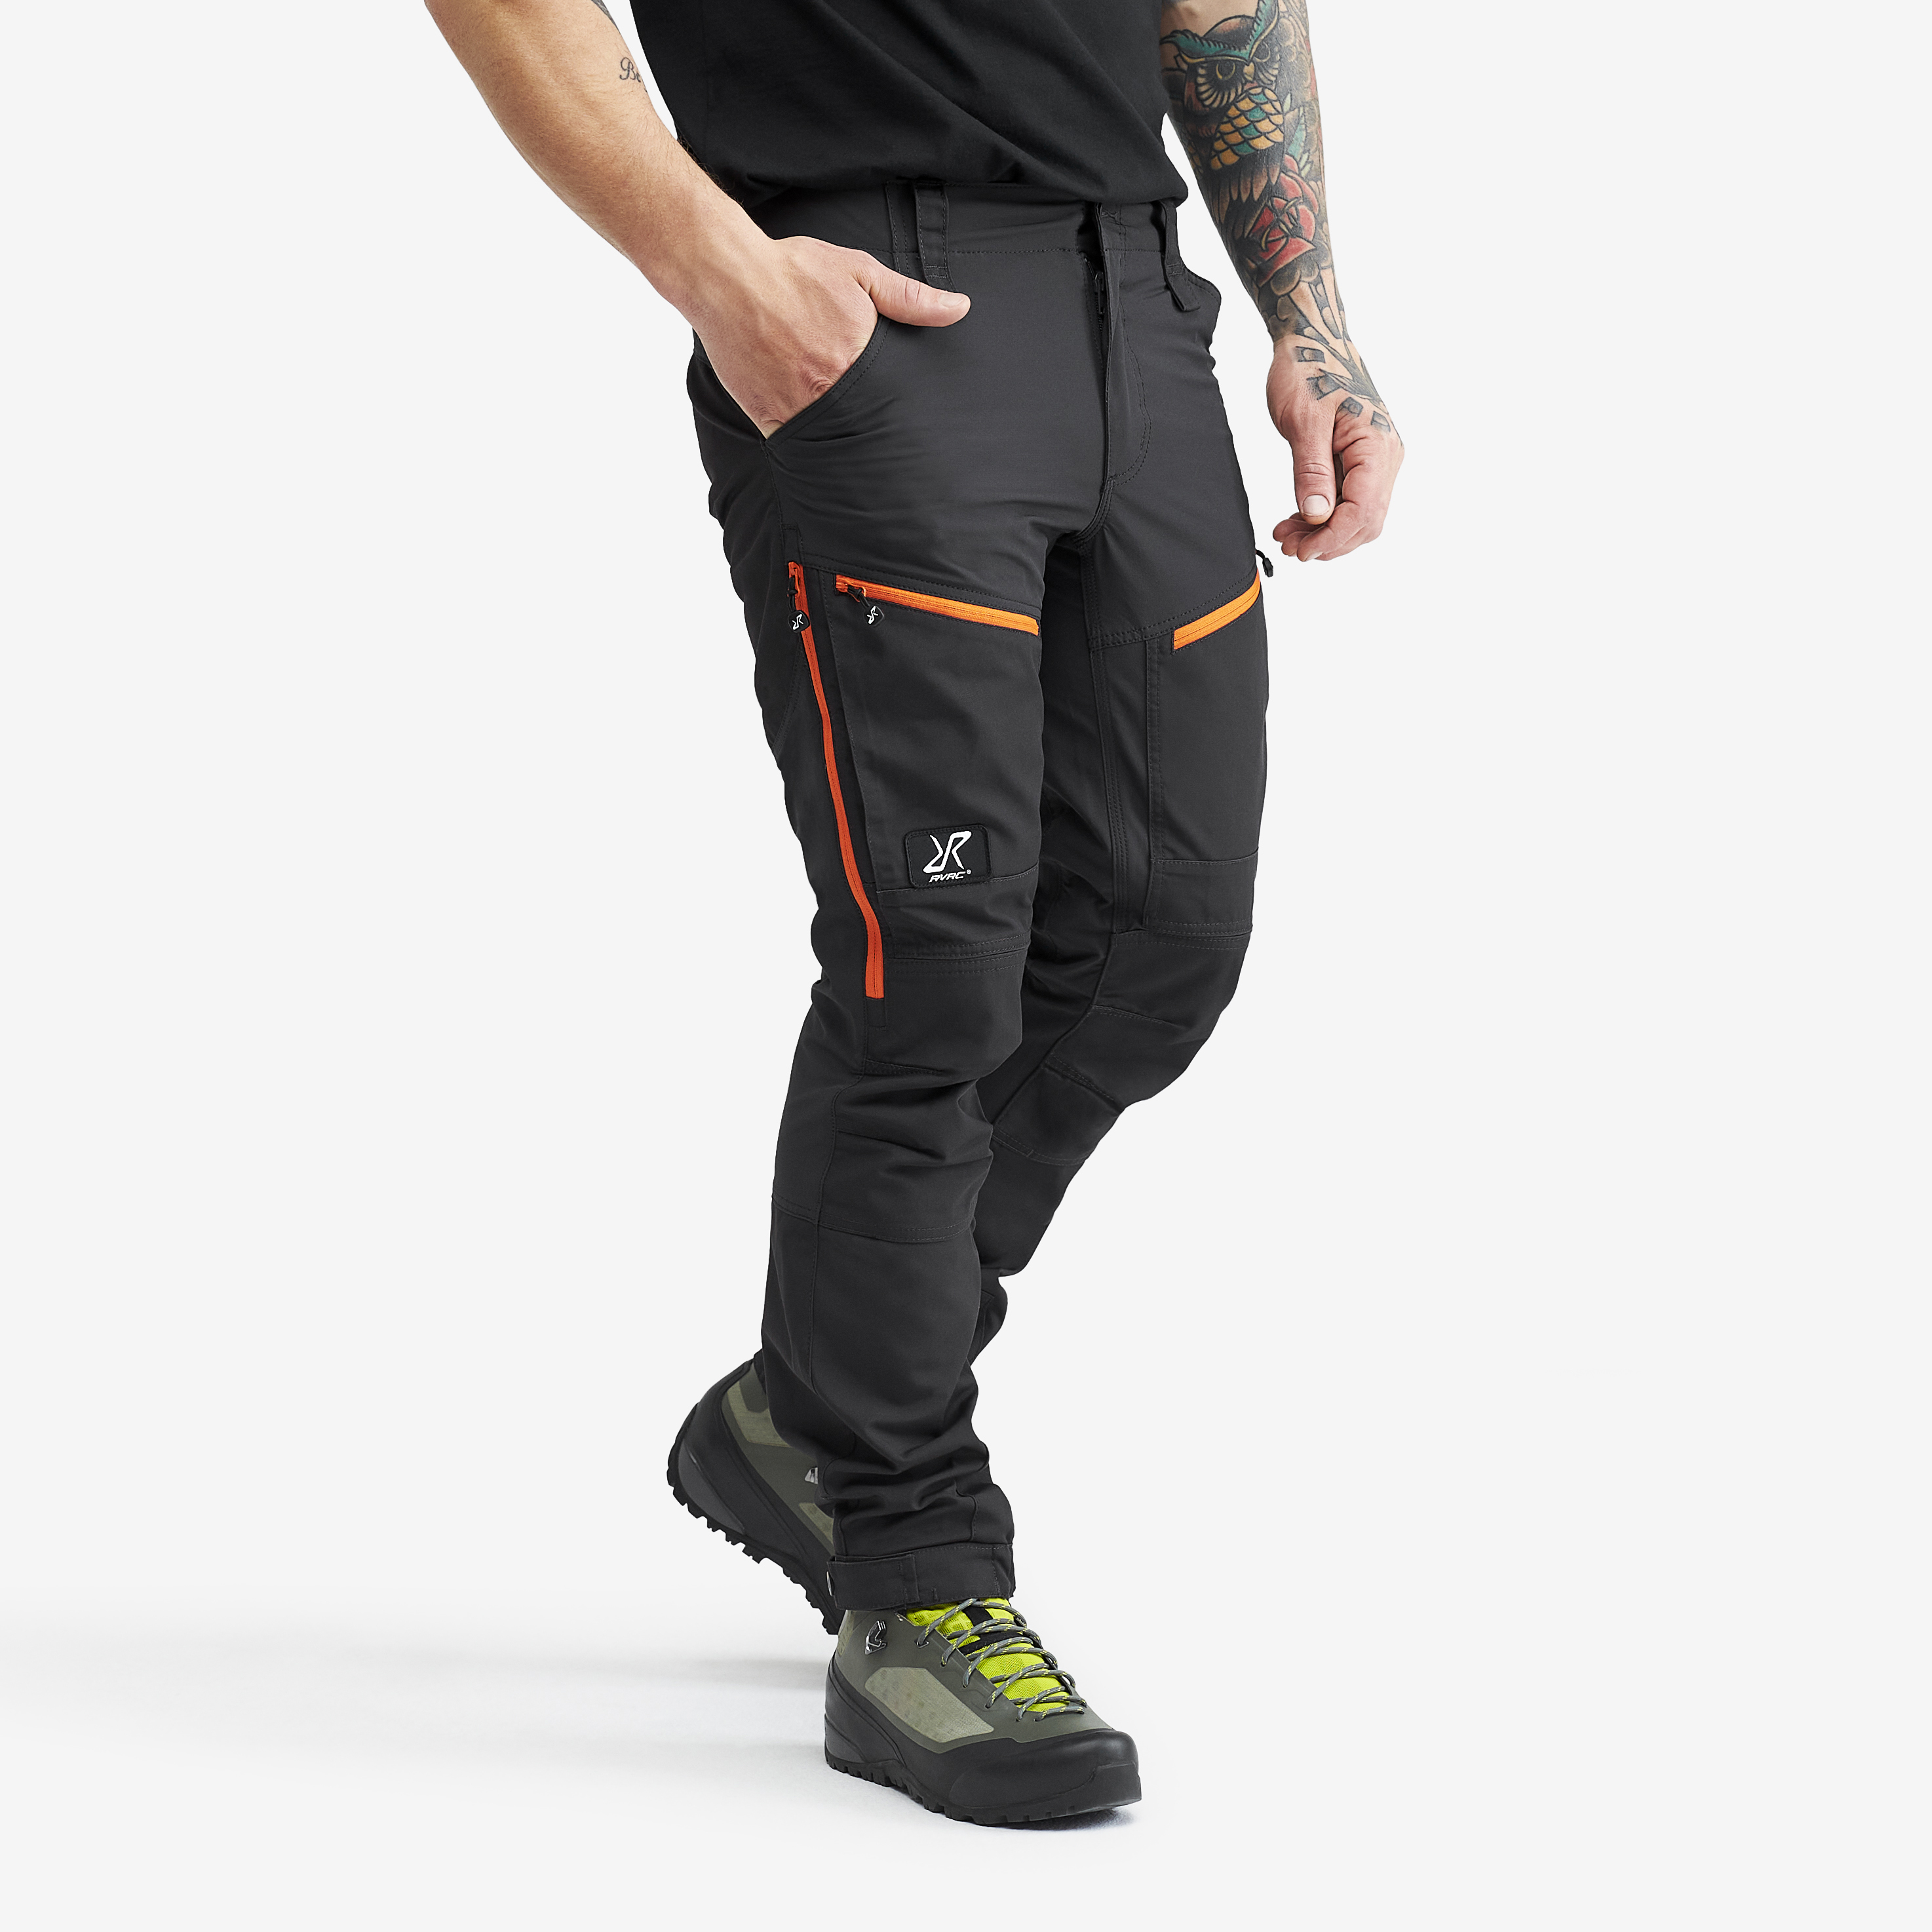 RVRC GP Pro Short hiking pants for men in dark grey